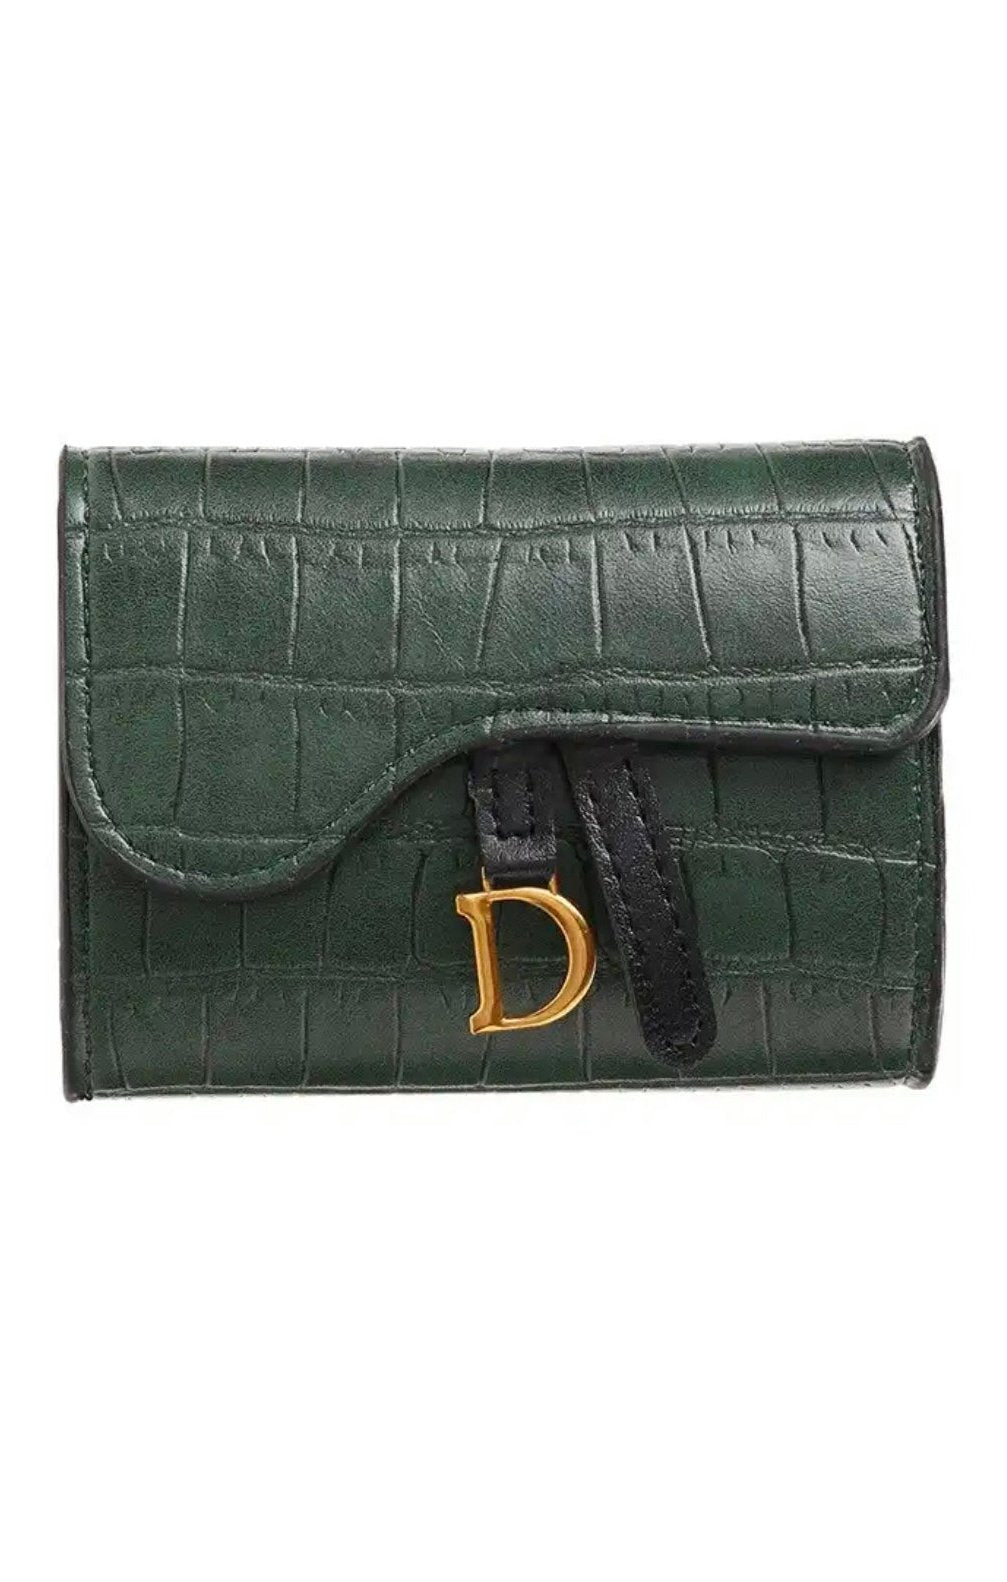 Designer D look alike Wallet Many Colors)